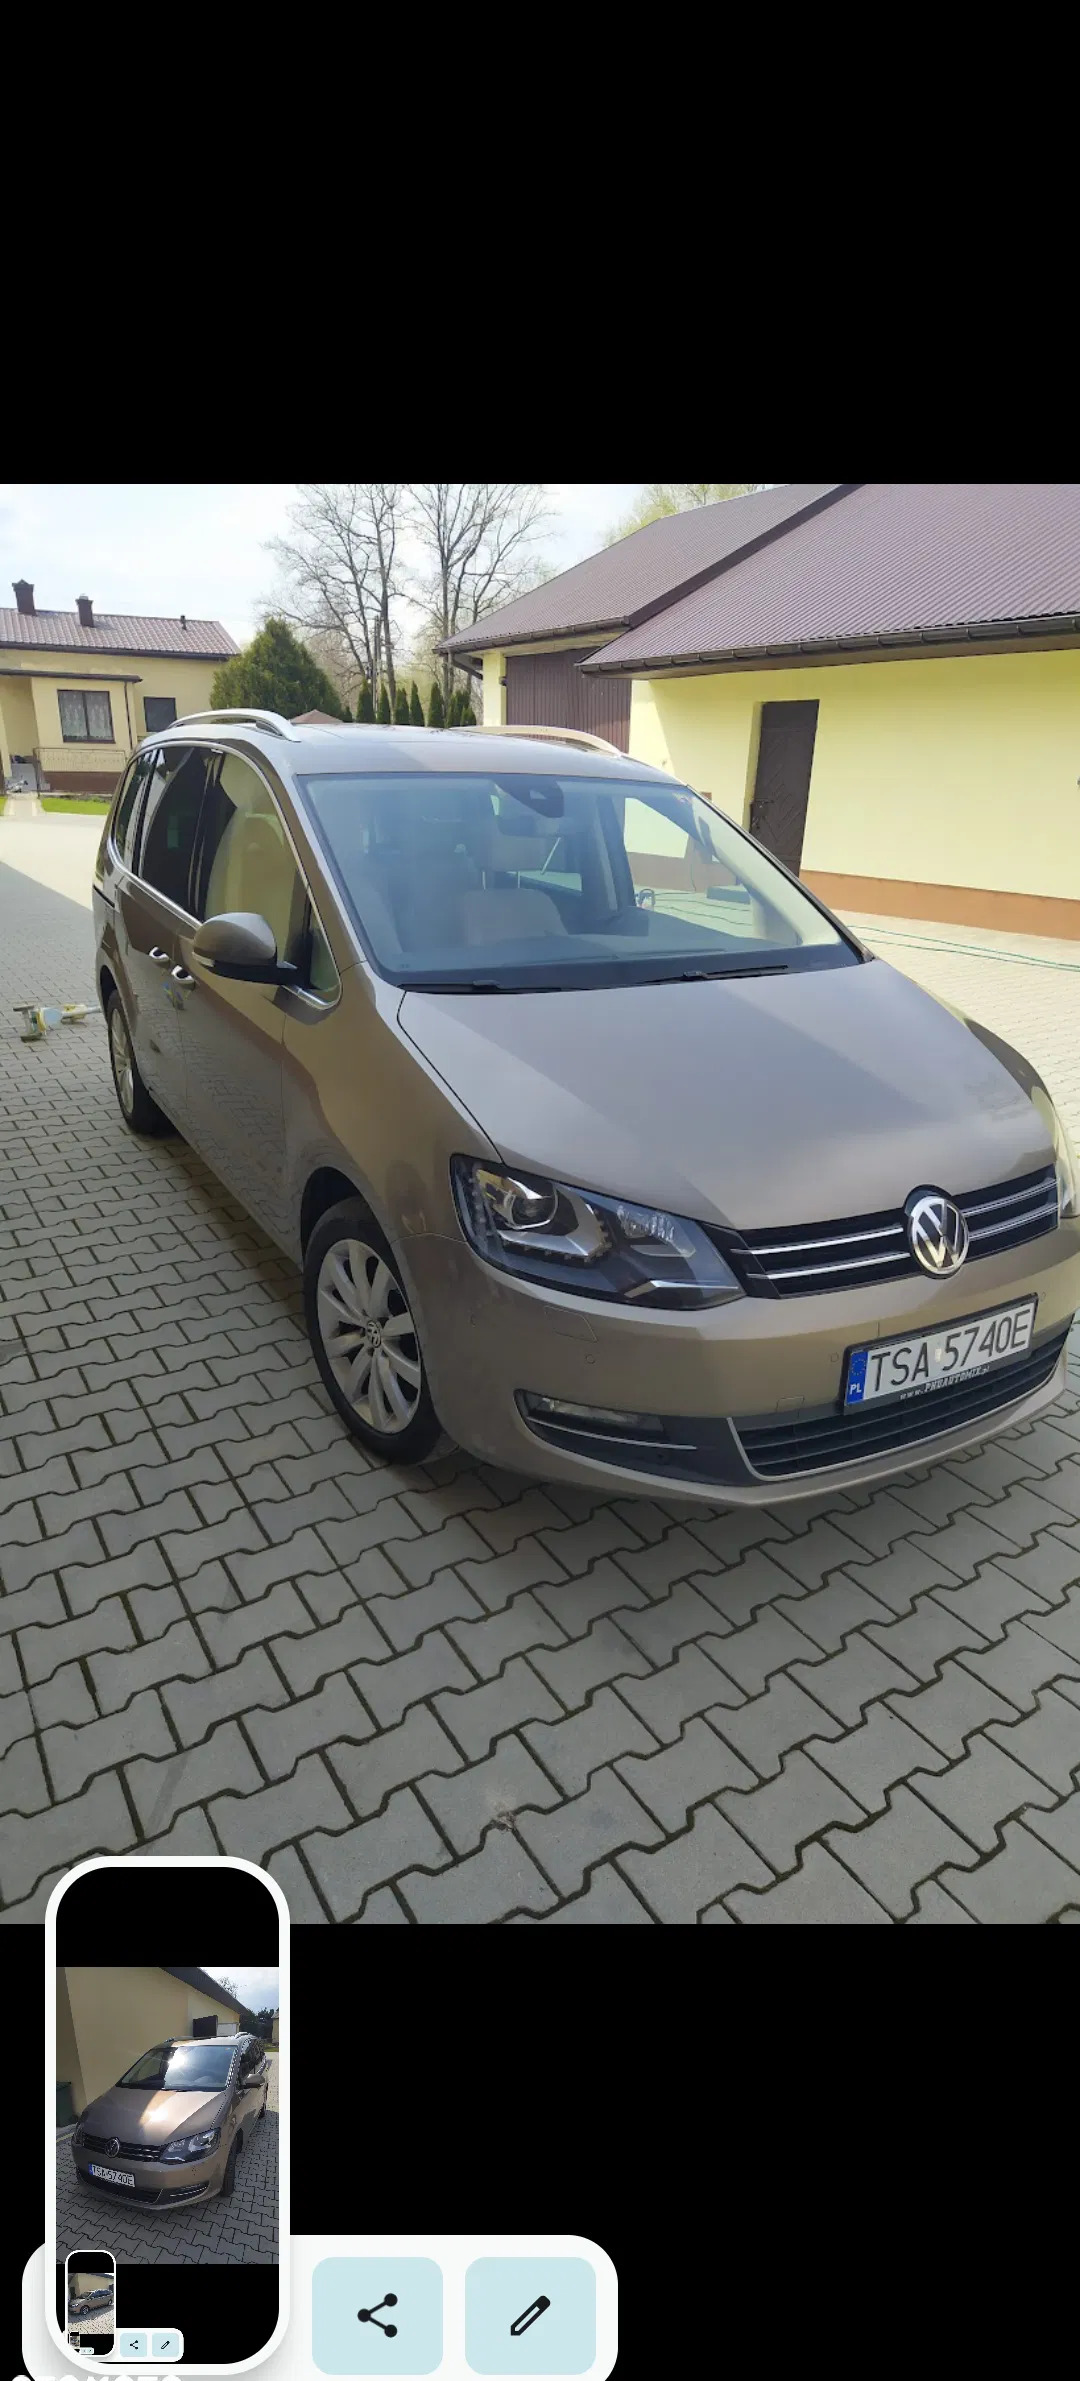 volkswagen Volkswagen Sharan cena 65900 przebieg: 233000, rok produkcji 2015 z Sandomierz